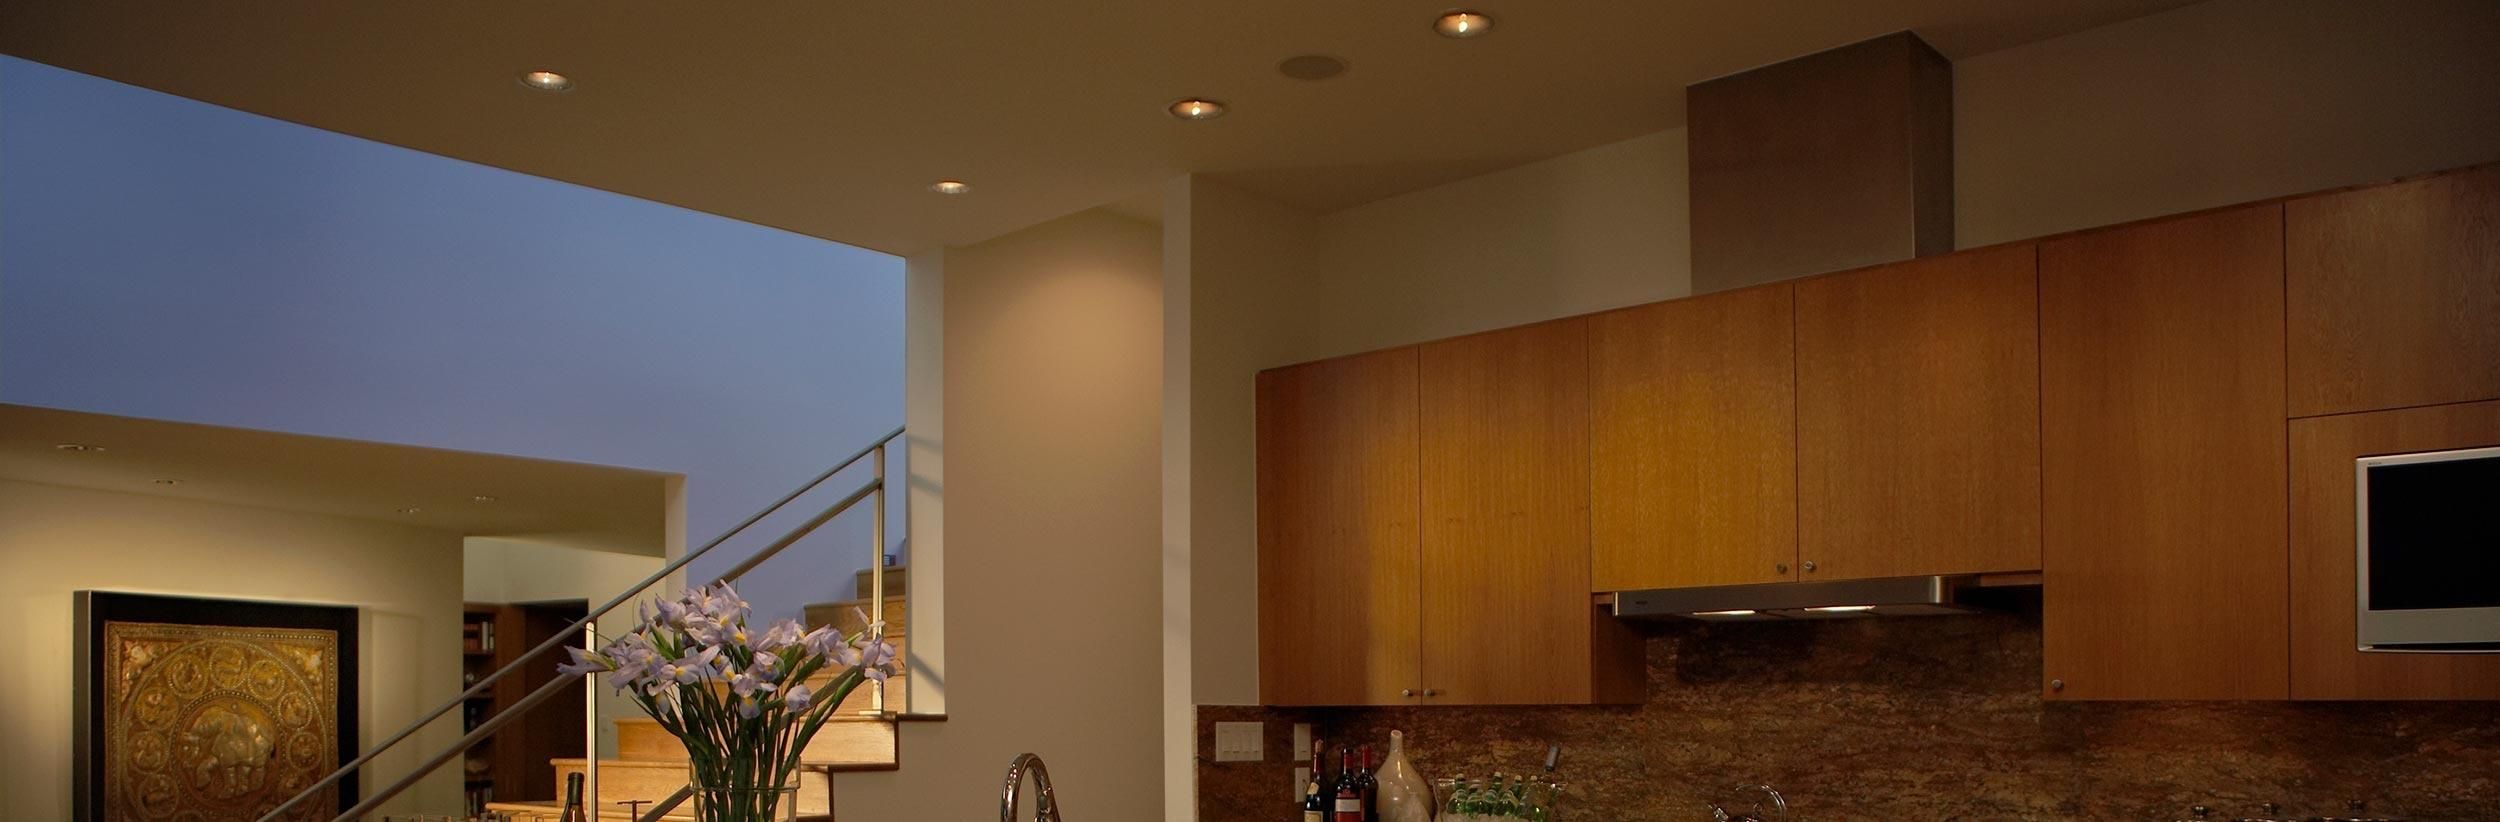 Retrofit LED Lamps in a kitchen